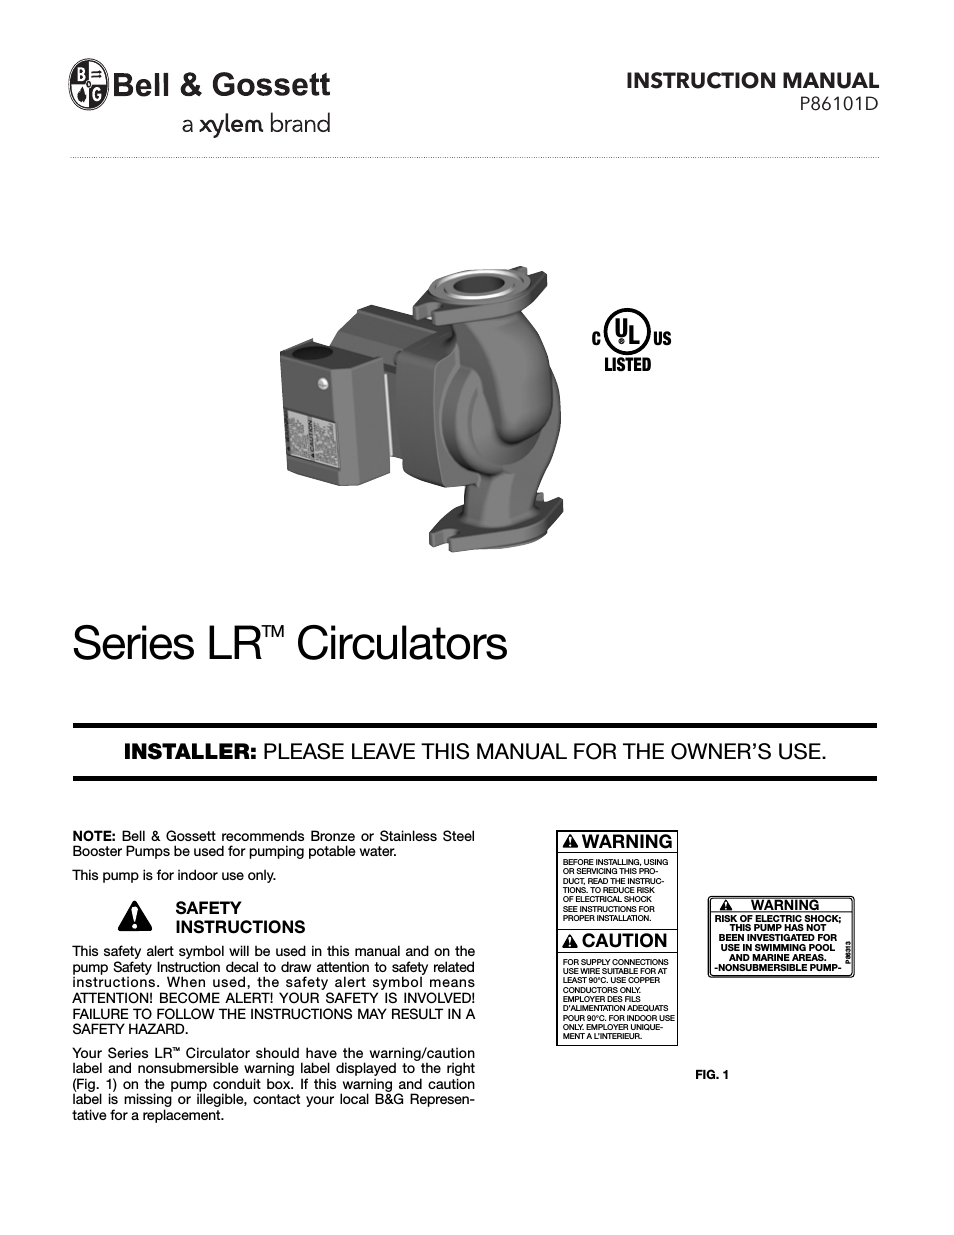 P86101D Series LR Circulators